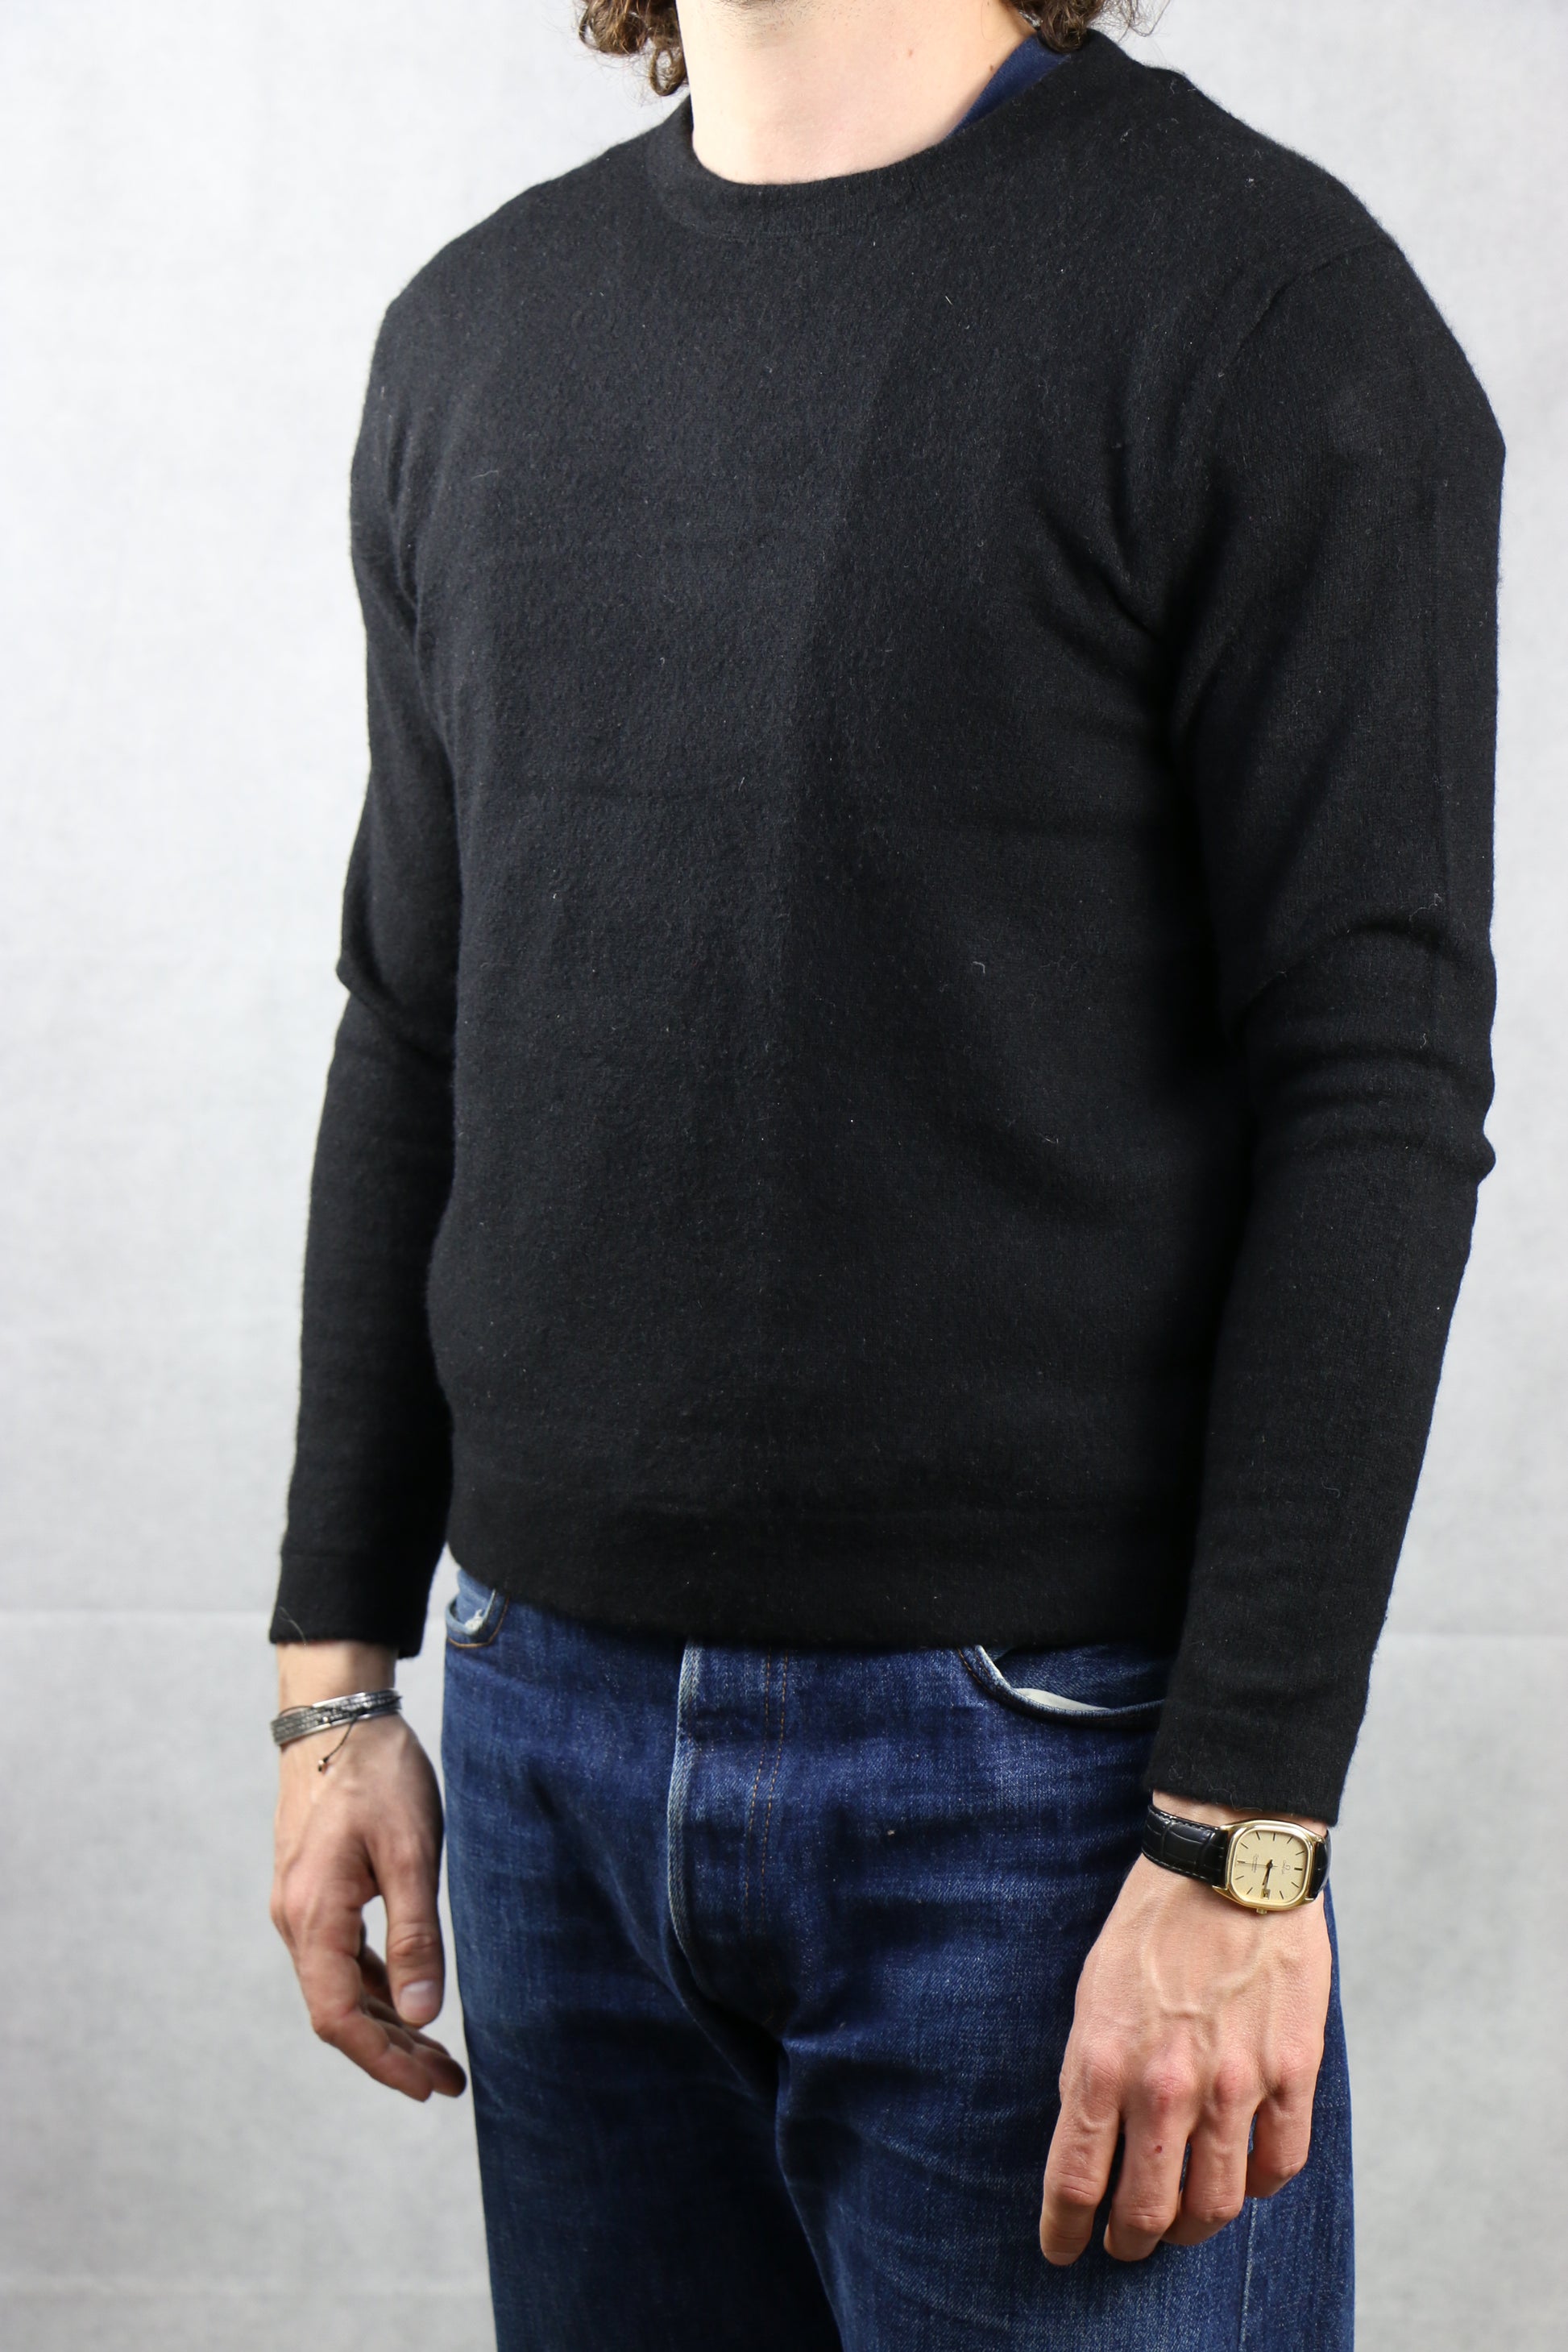 Ralph Lauran Cashmere Black Sweater - vintage clothing clochard92.com